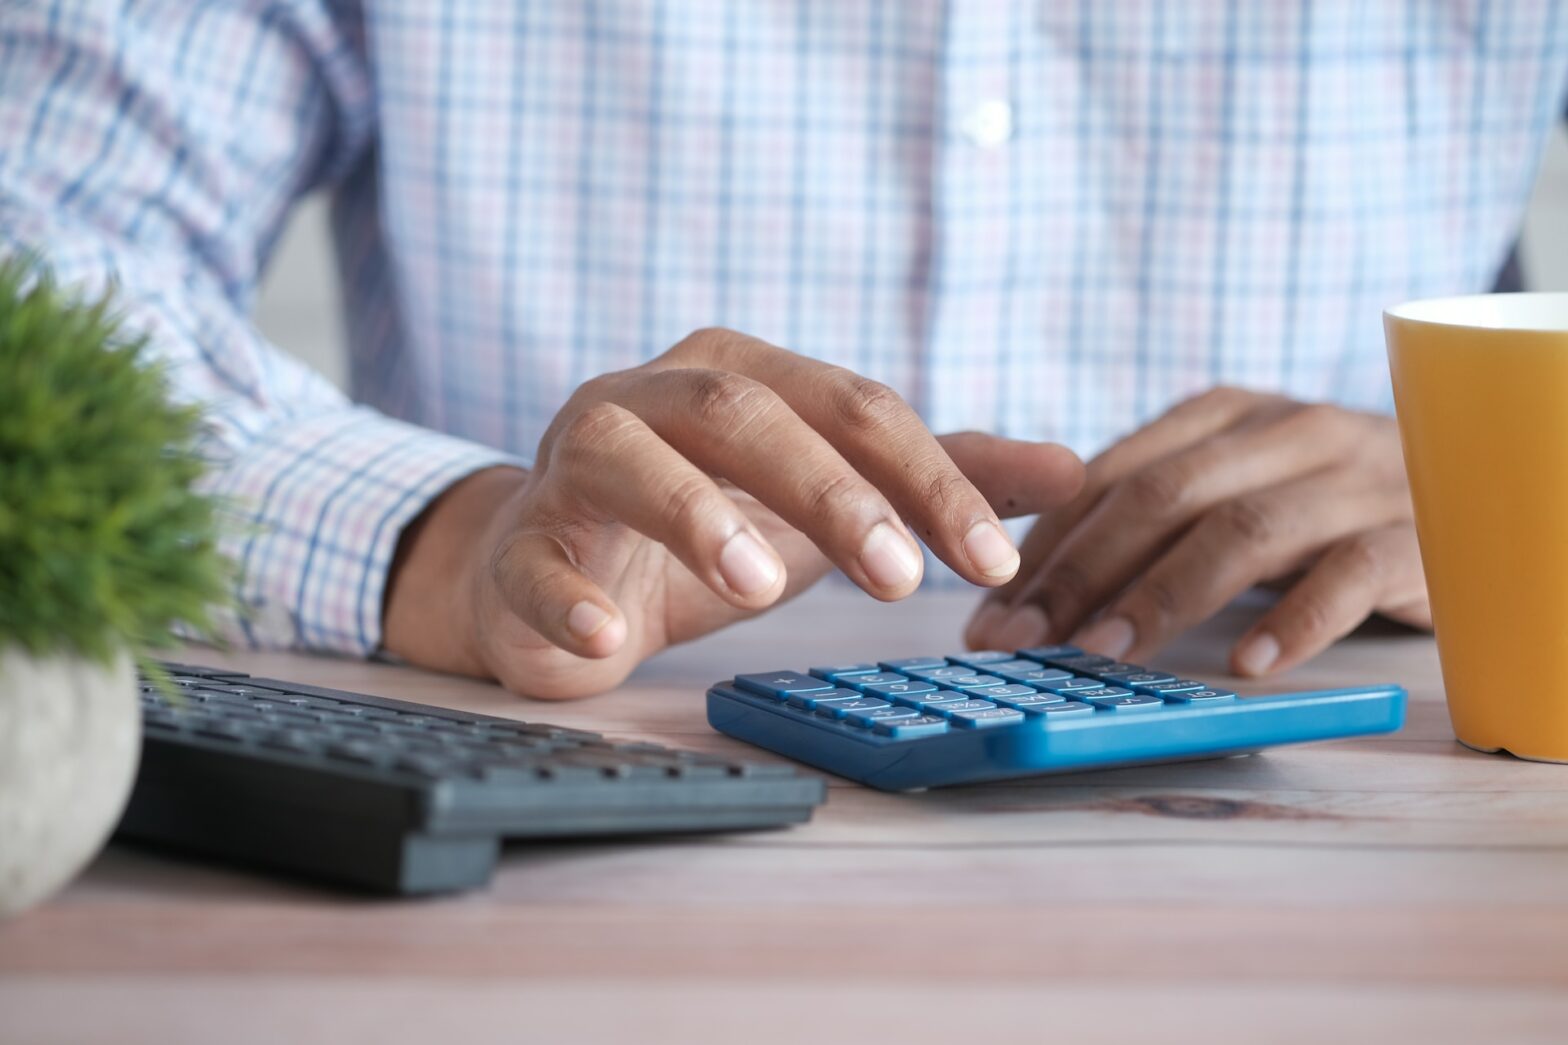 A man using a calculator.